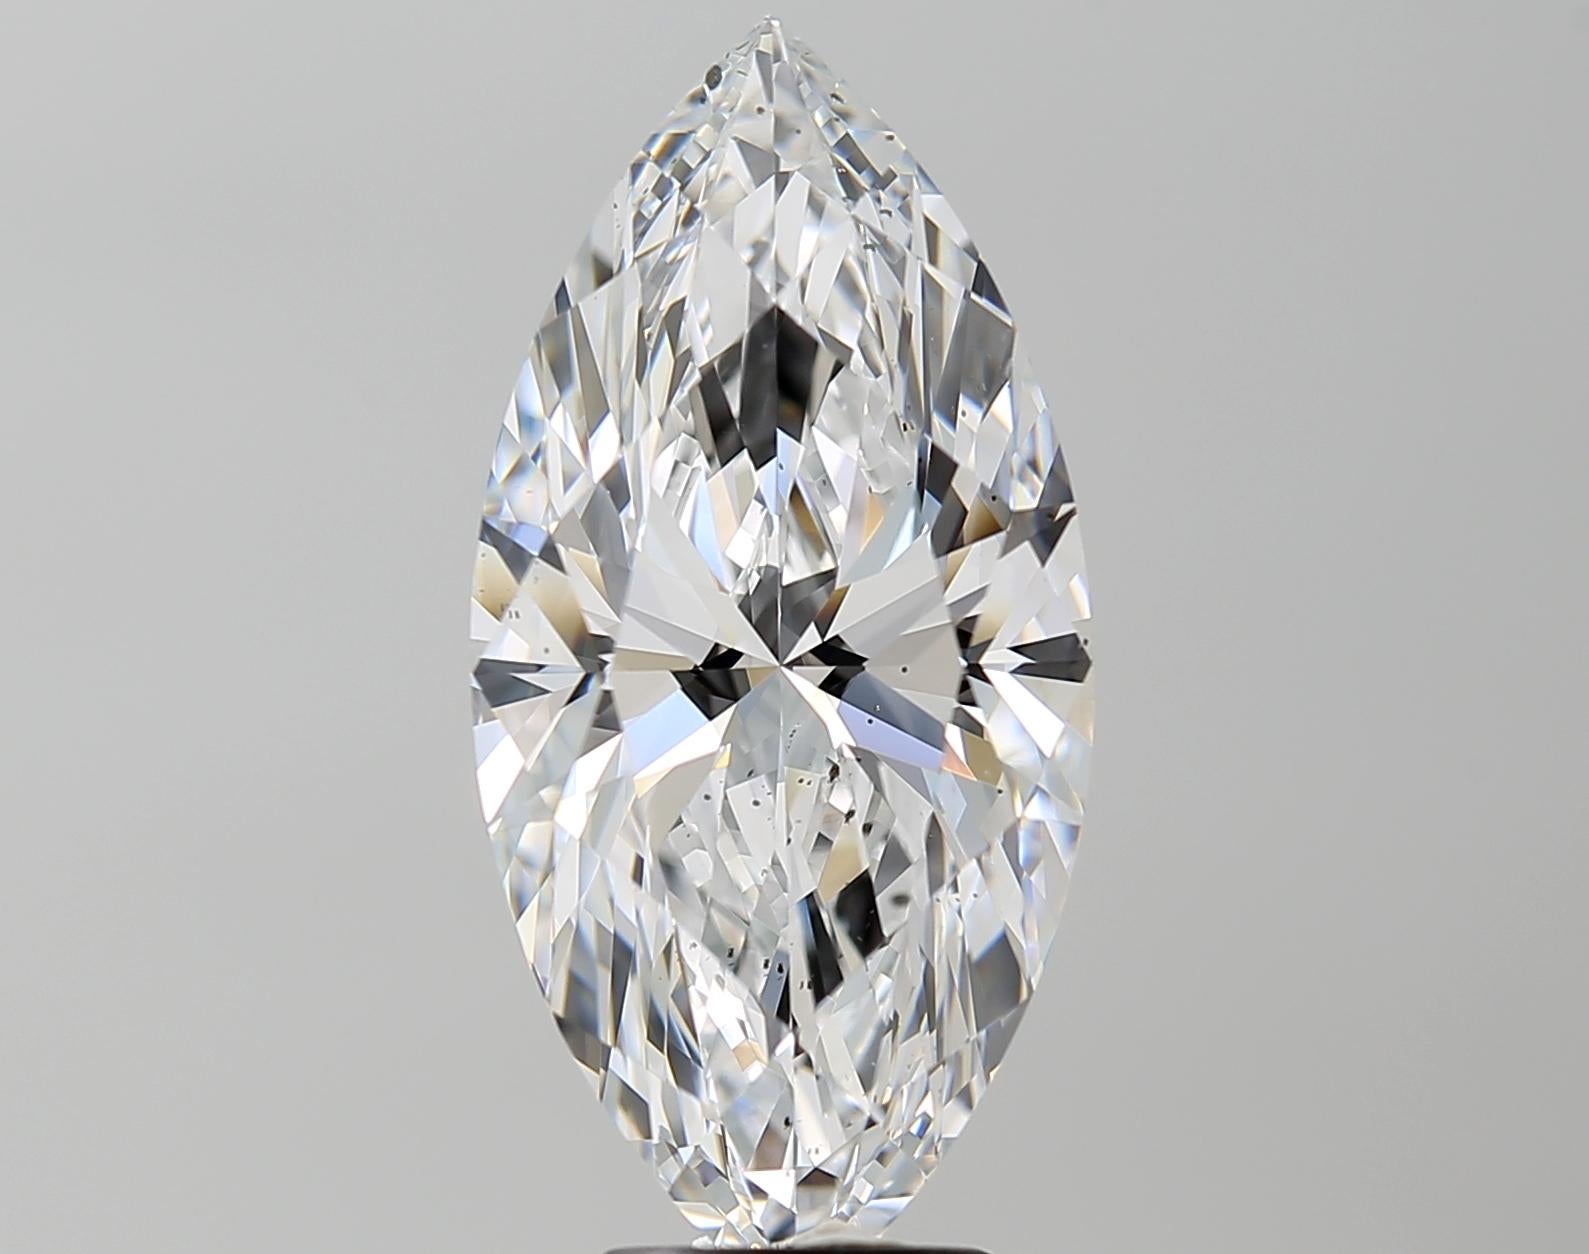 Contemporain Brilliante GIA Certified 5.01 Carat D Color Marquise Brilliant Cut Diamond en vente